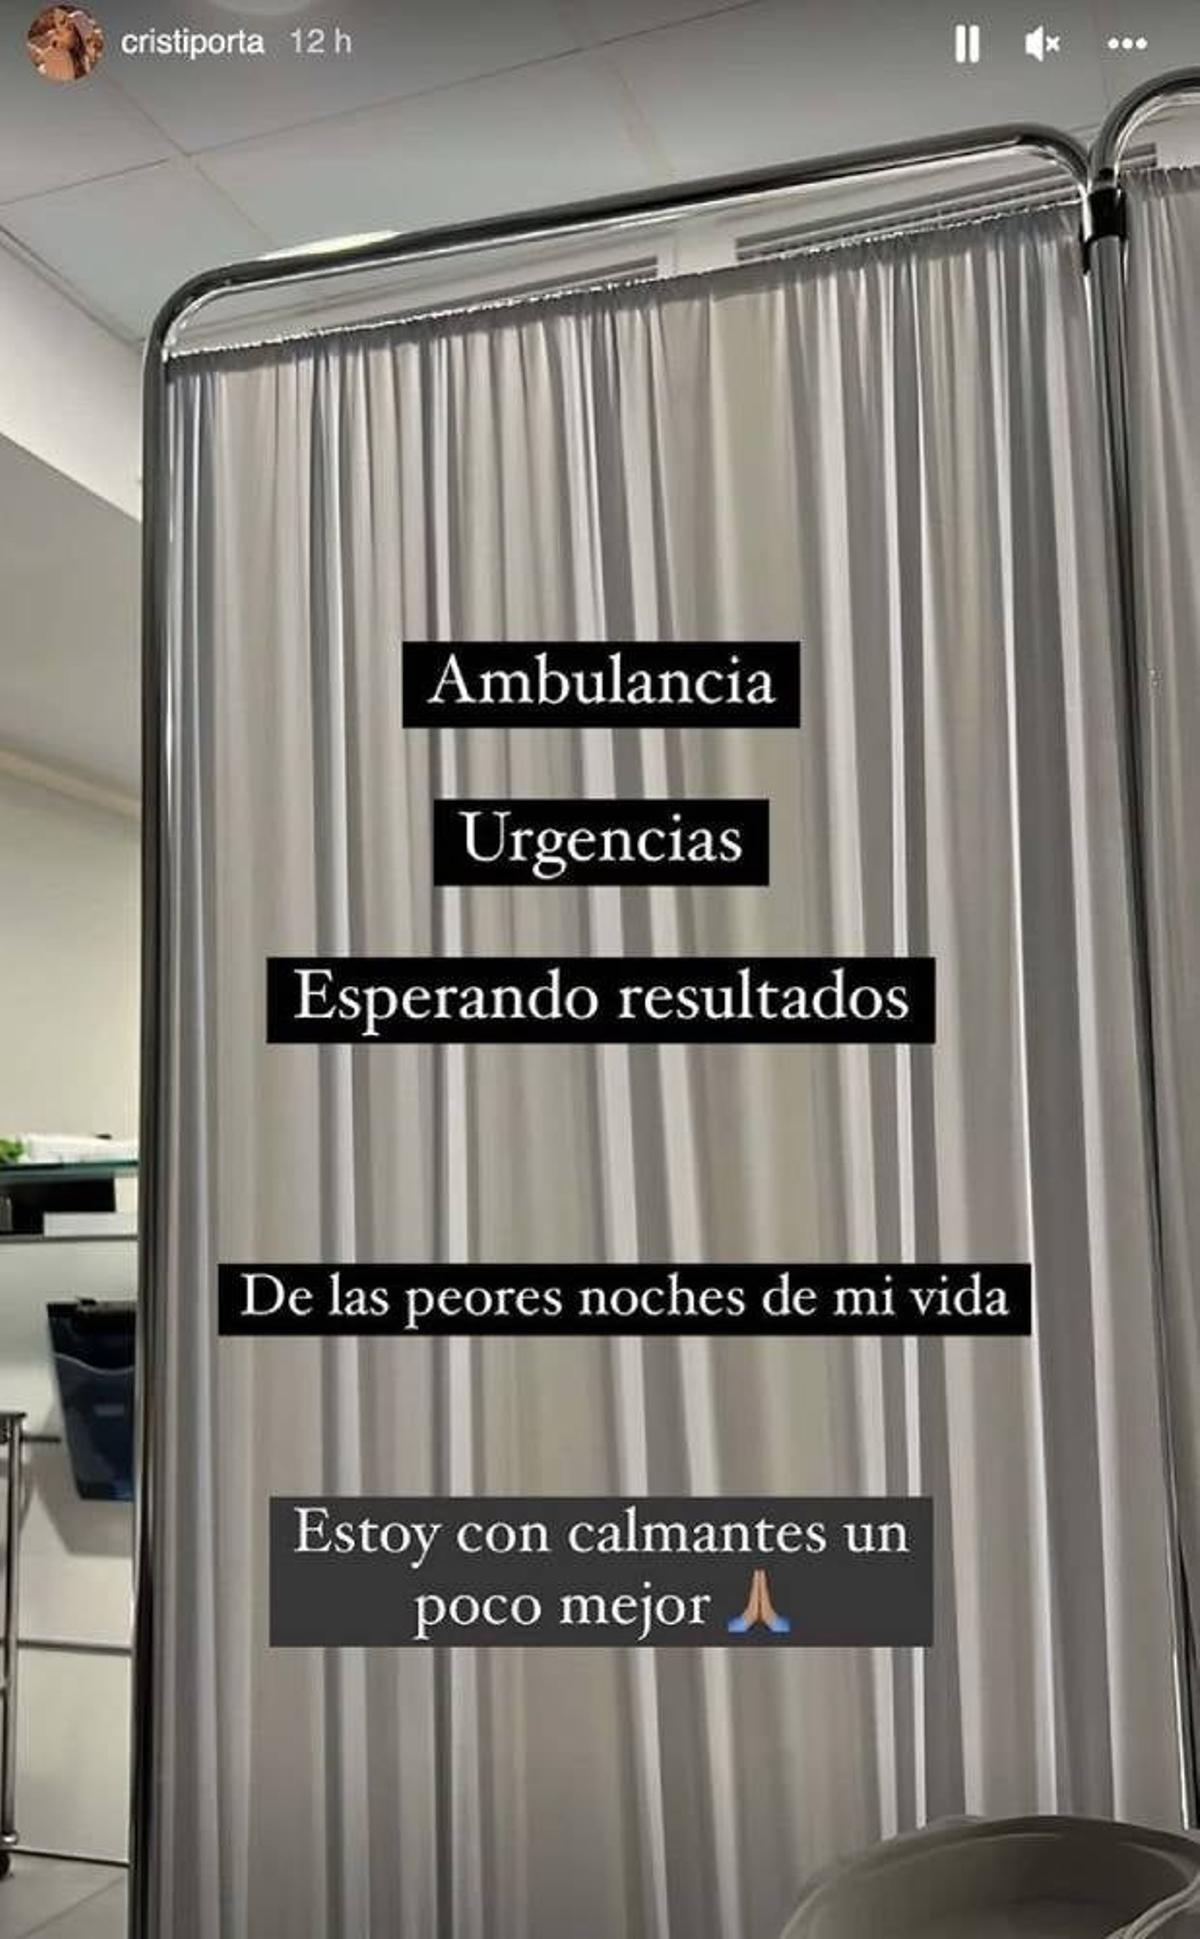 Un Instagram Stories de Cristina Porta, en las urgencias de un hospital